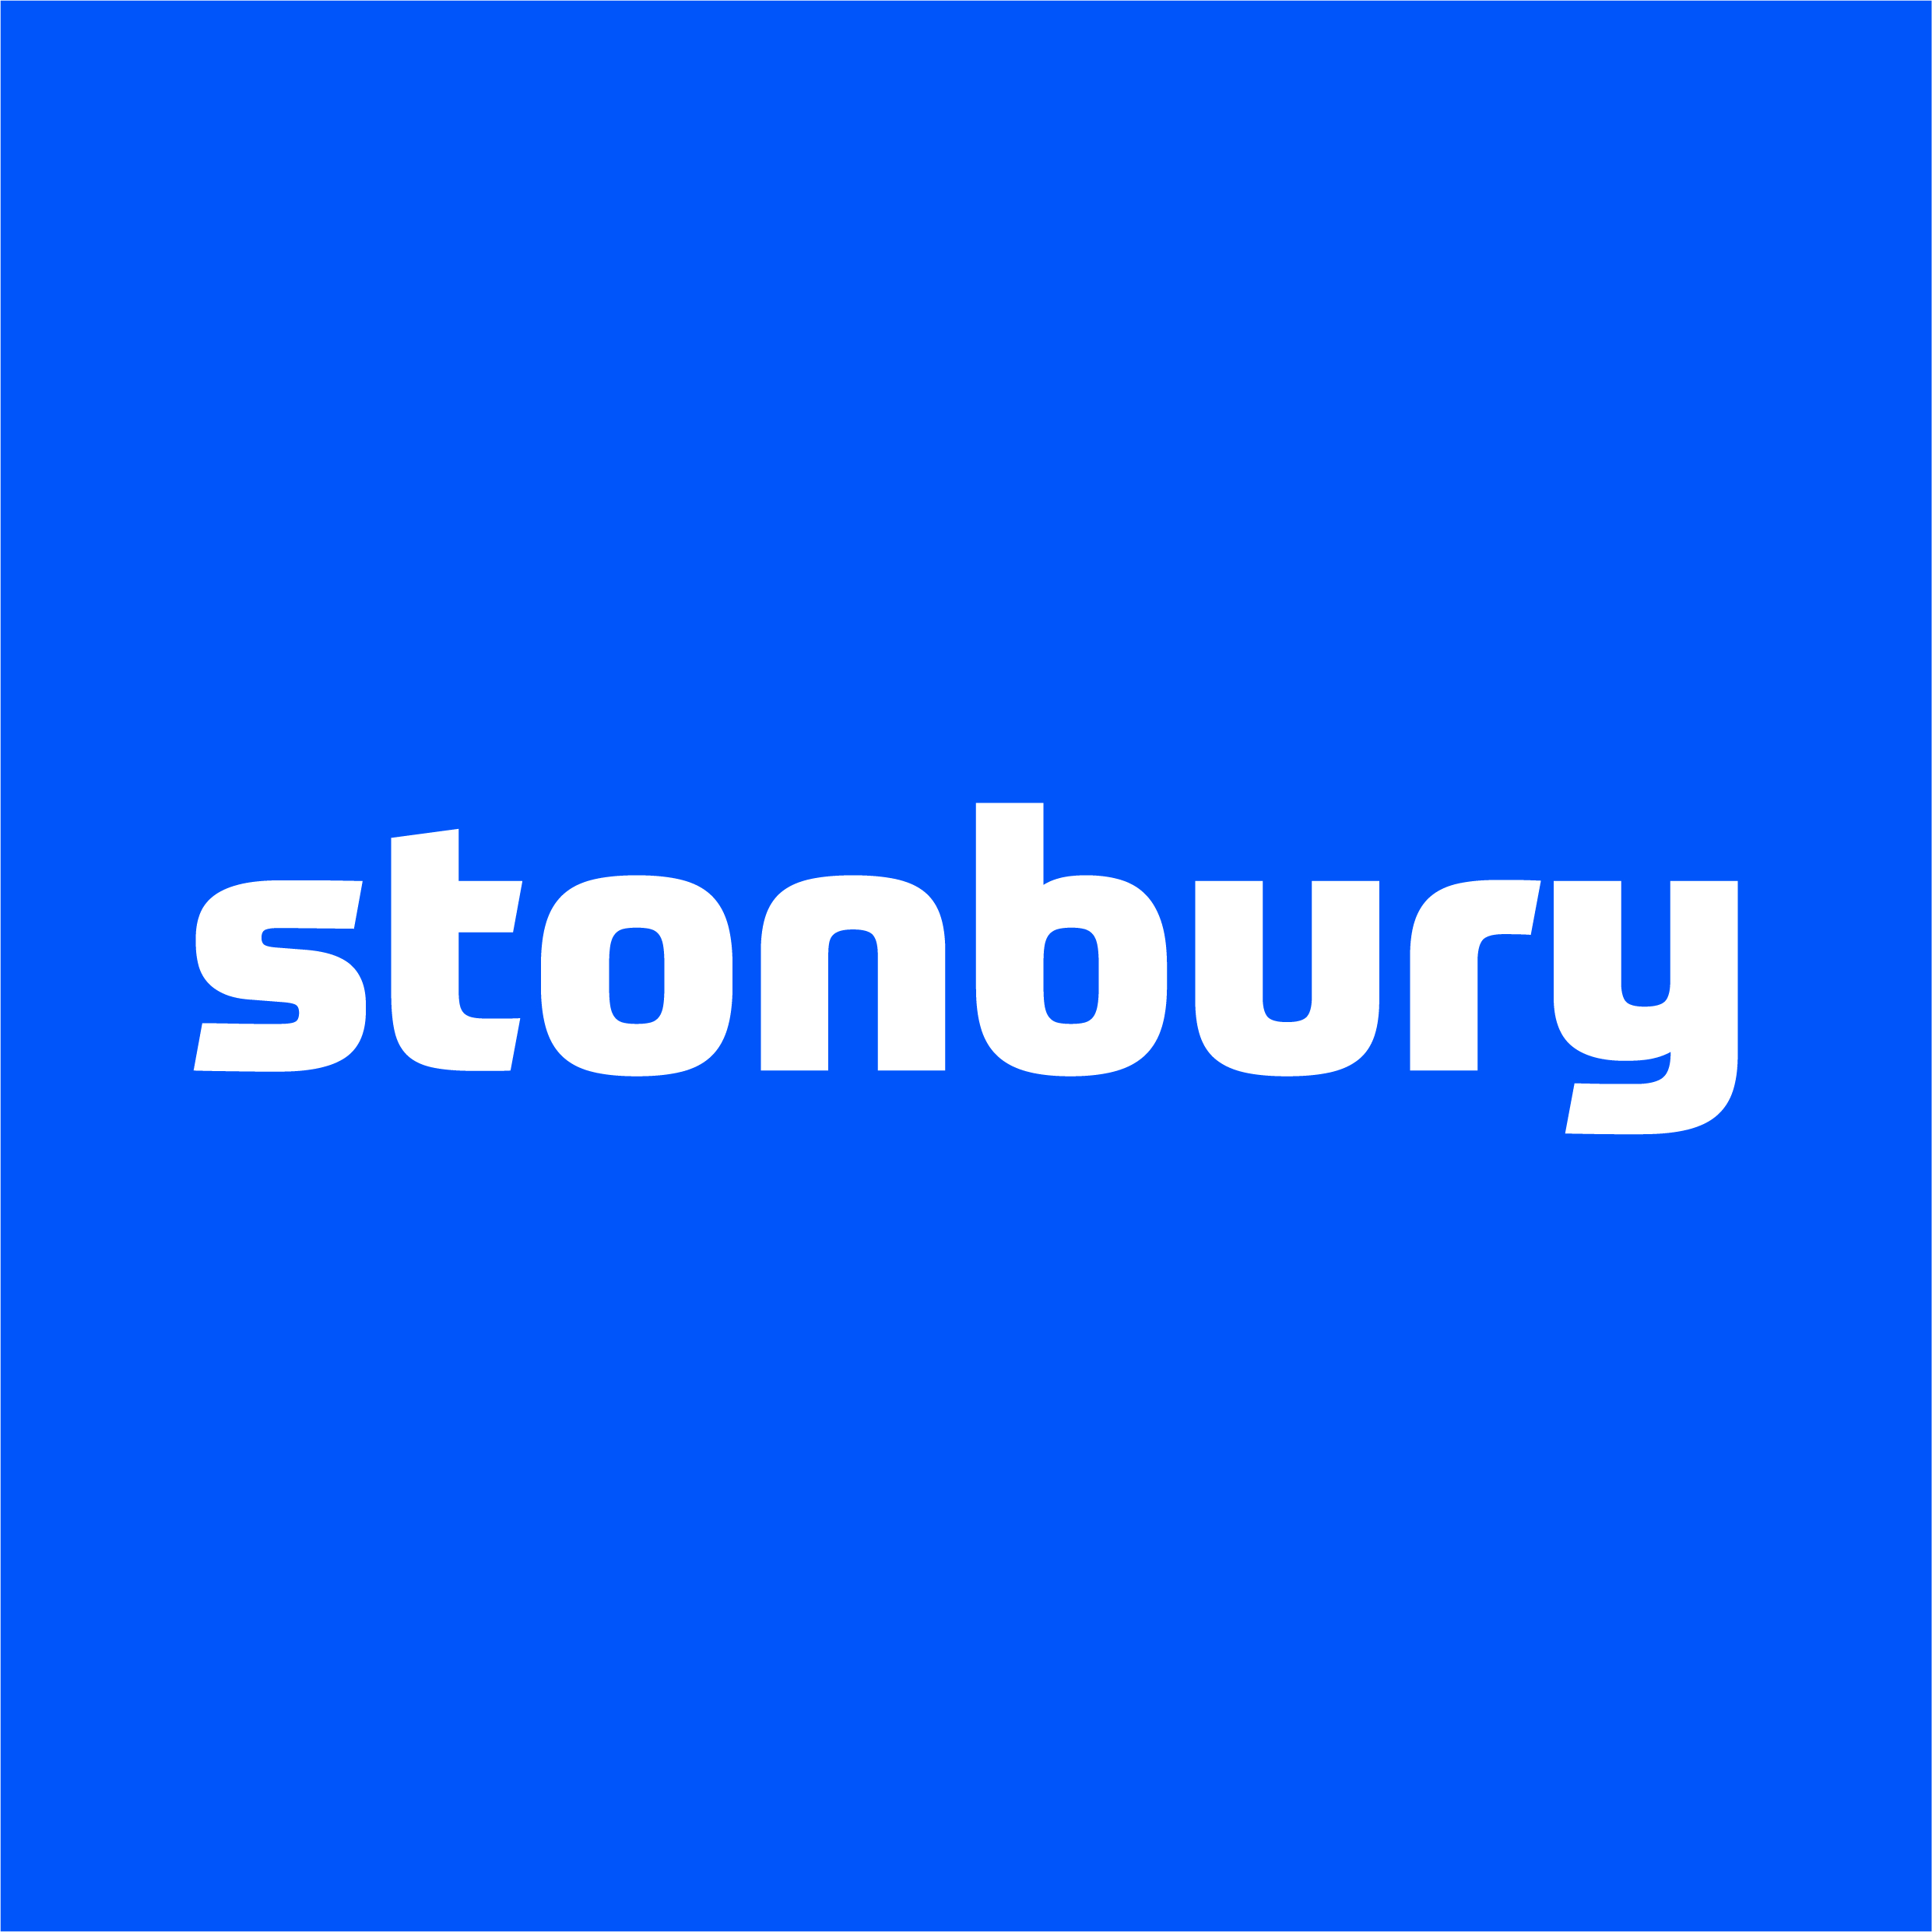 Stonbury - Stores Inspection Checklist